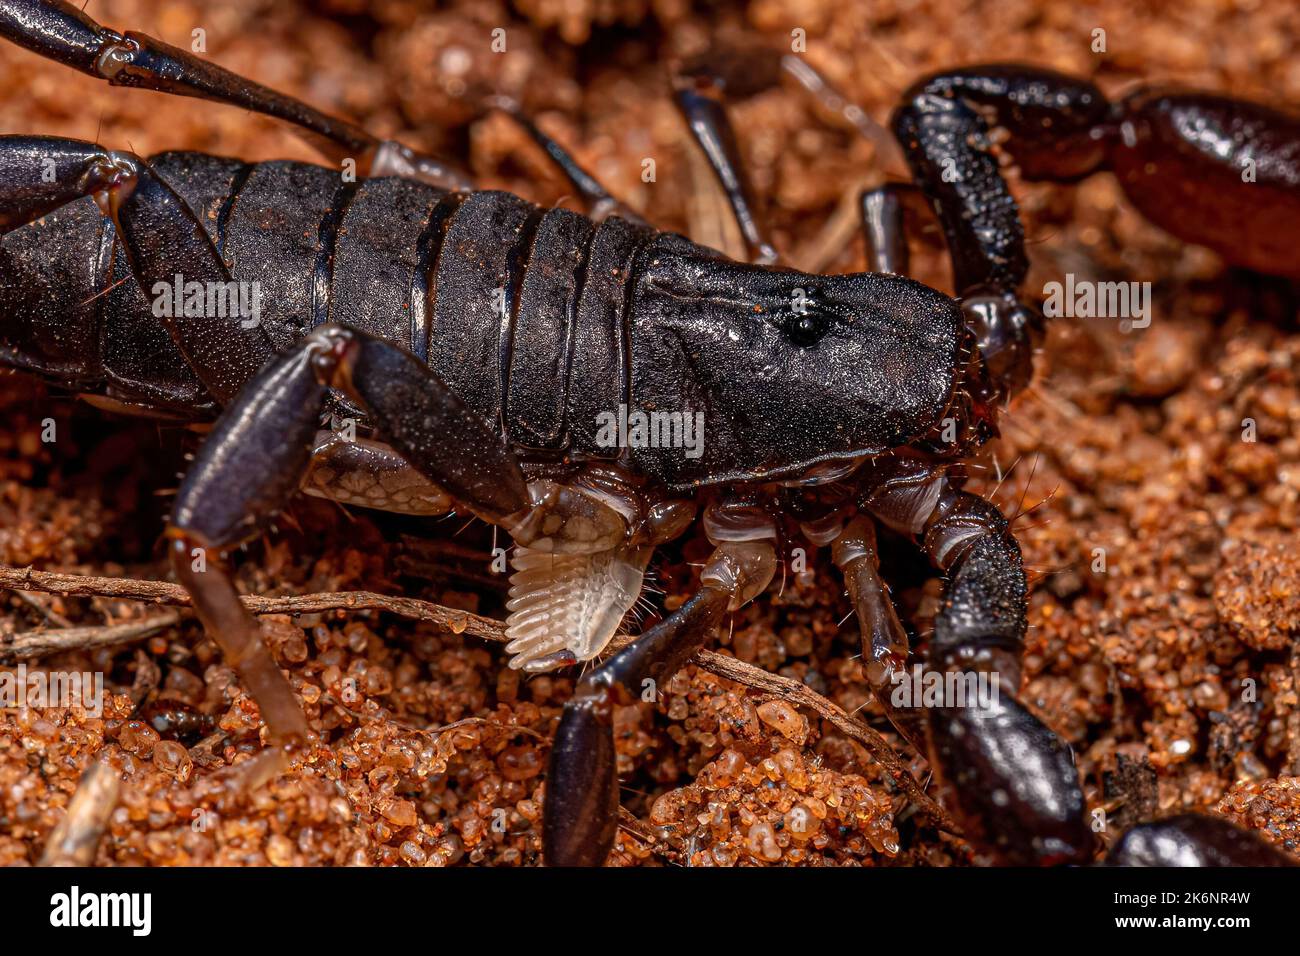 arthropod arachnid chelicerate scorpion of the Family Bothriuridae Stock Photo